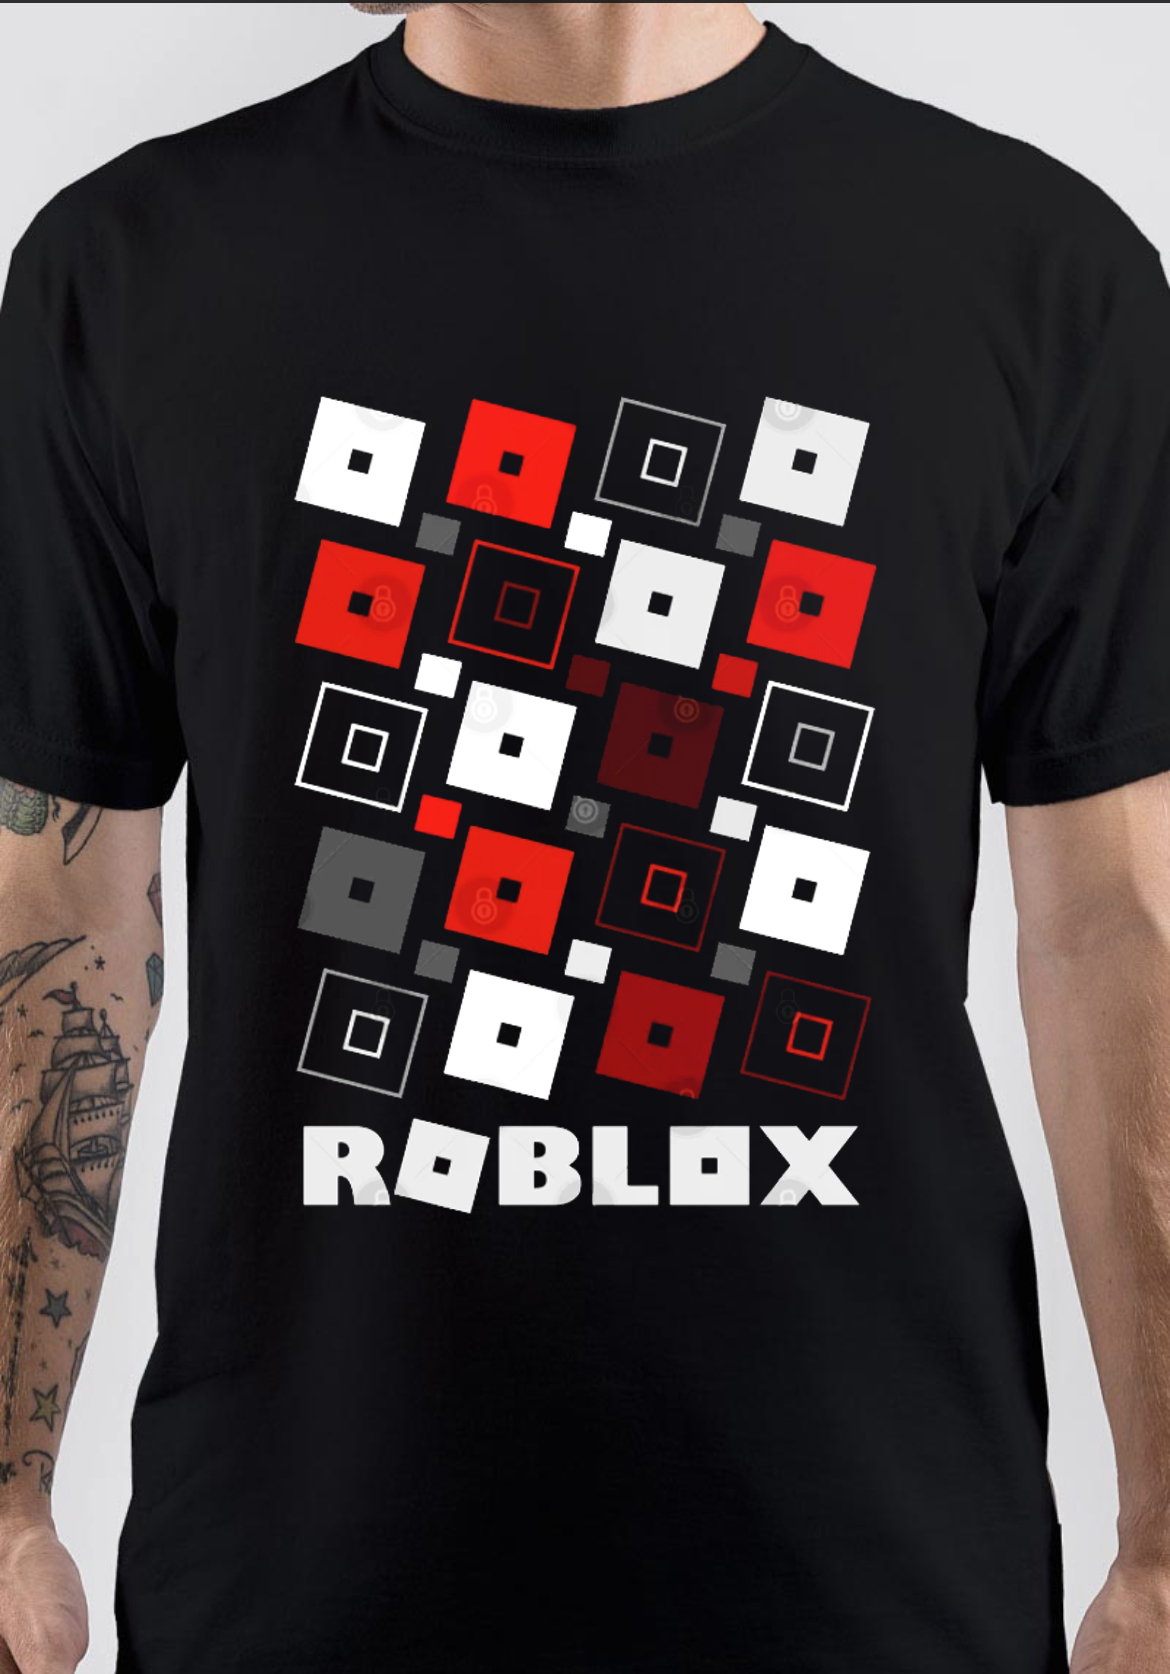 roblox - Roblox - T-Shirt